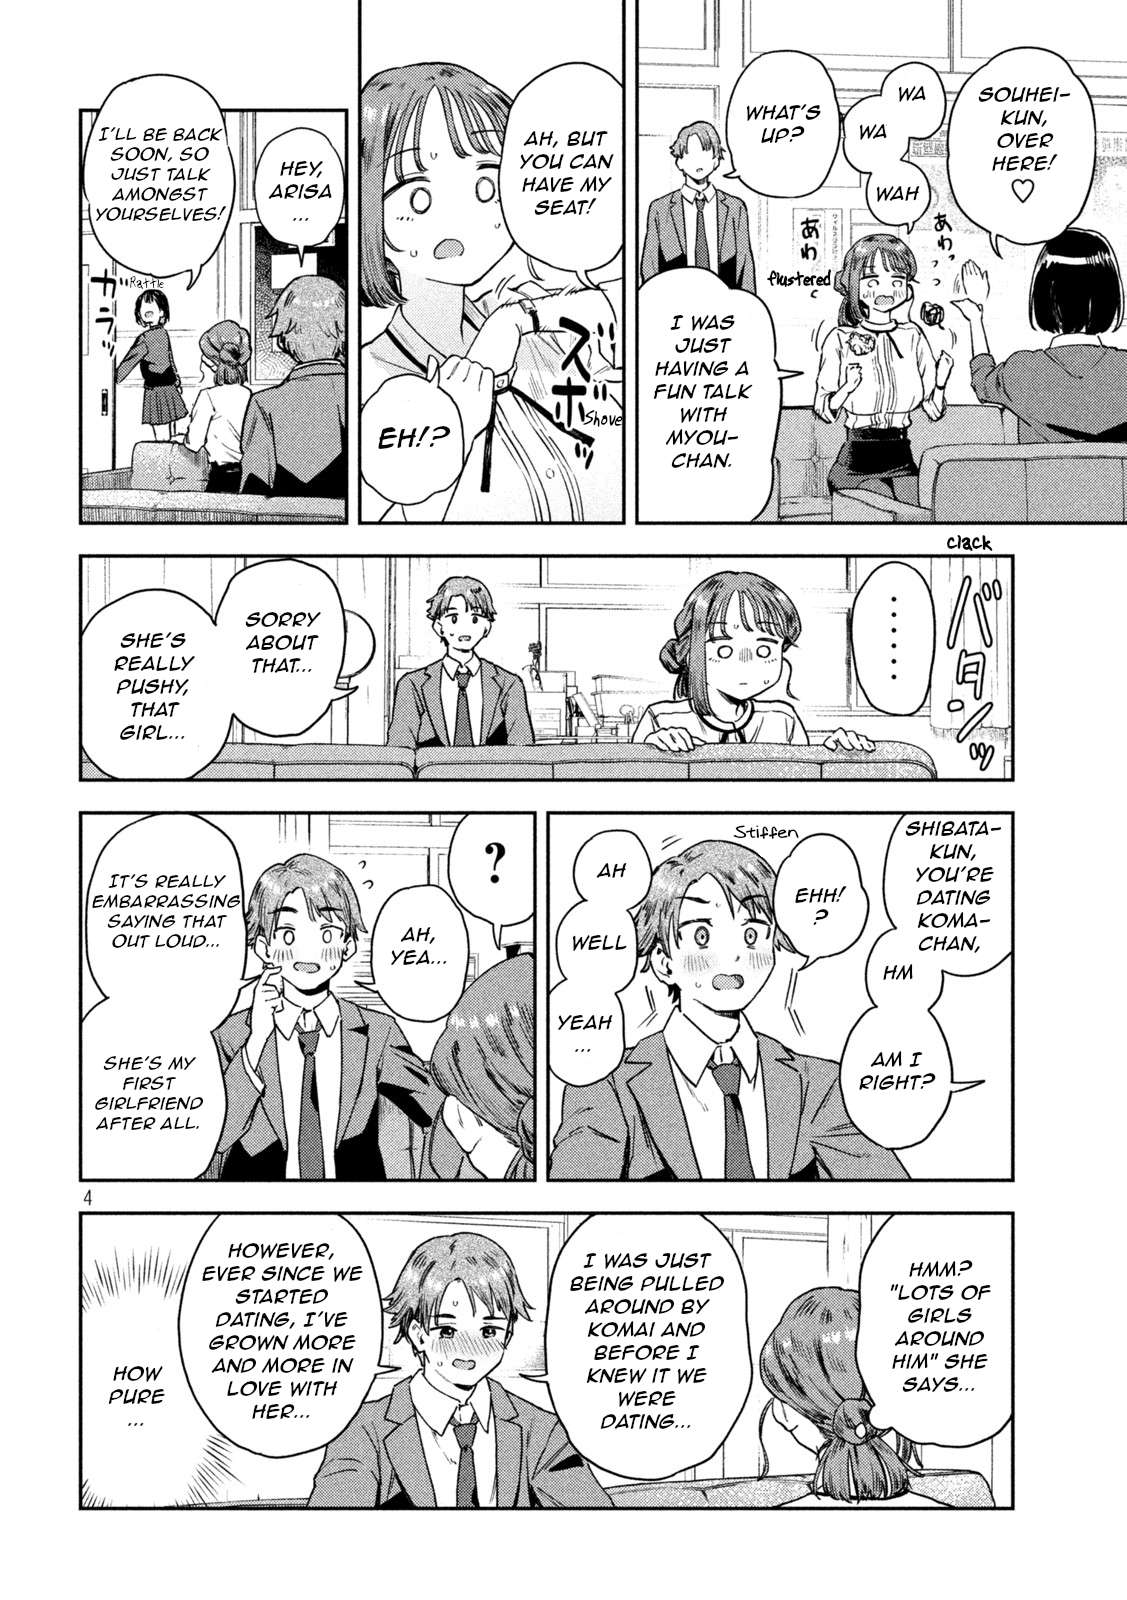 Miyo-Chan Sensei Said So - chapter 7 - #4